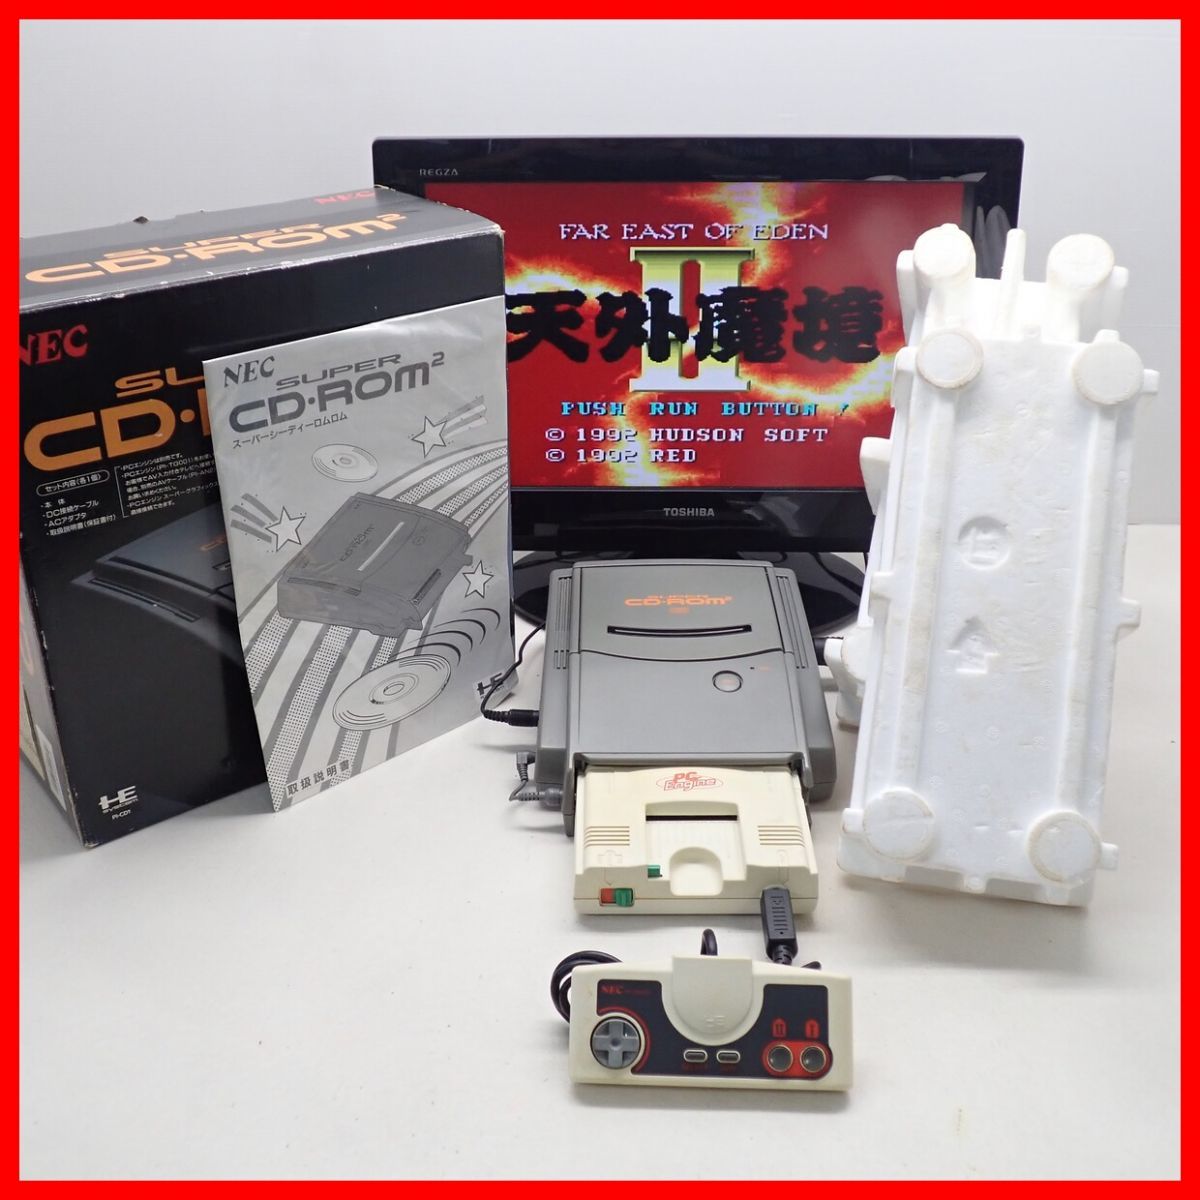 PCエンジン SUPER CD-ROM2 PI-CD1 日本電気 NEC 箱説付-